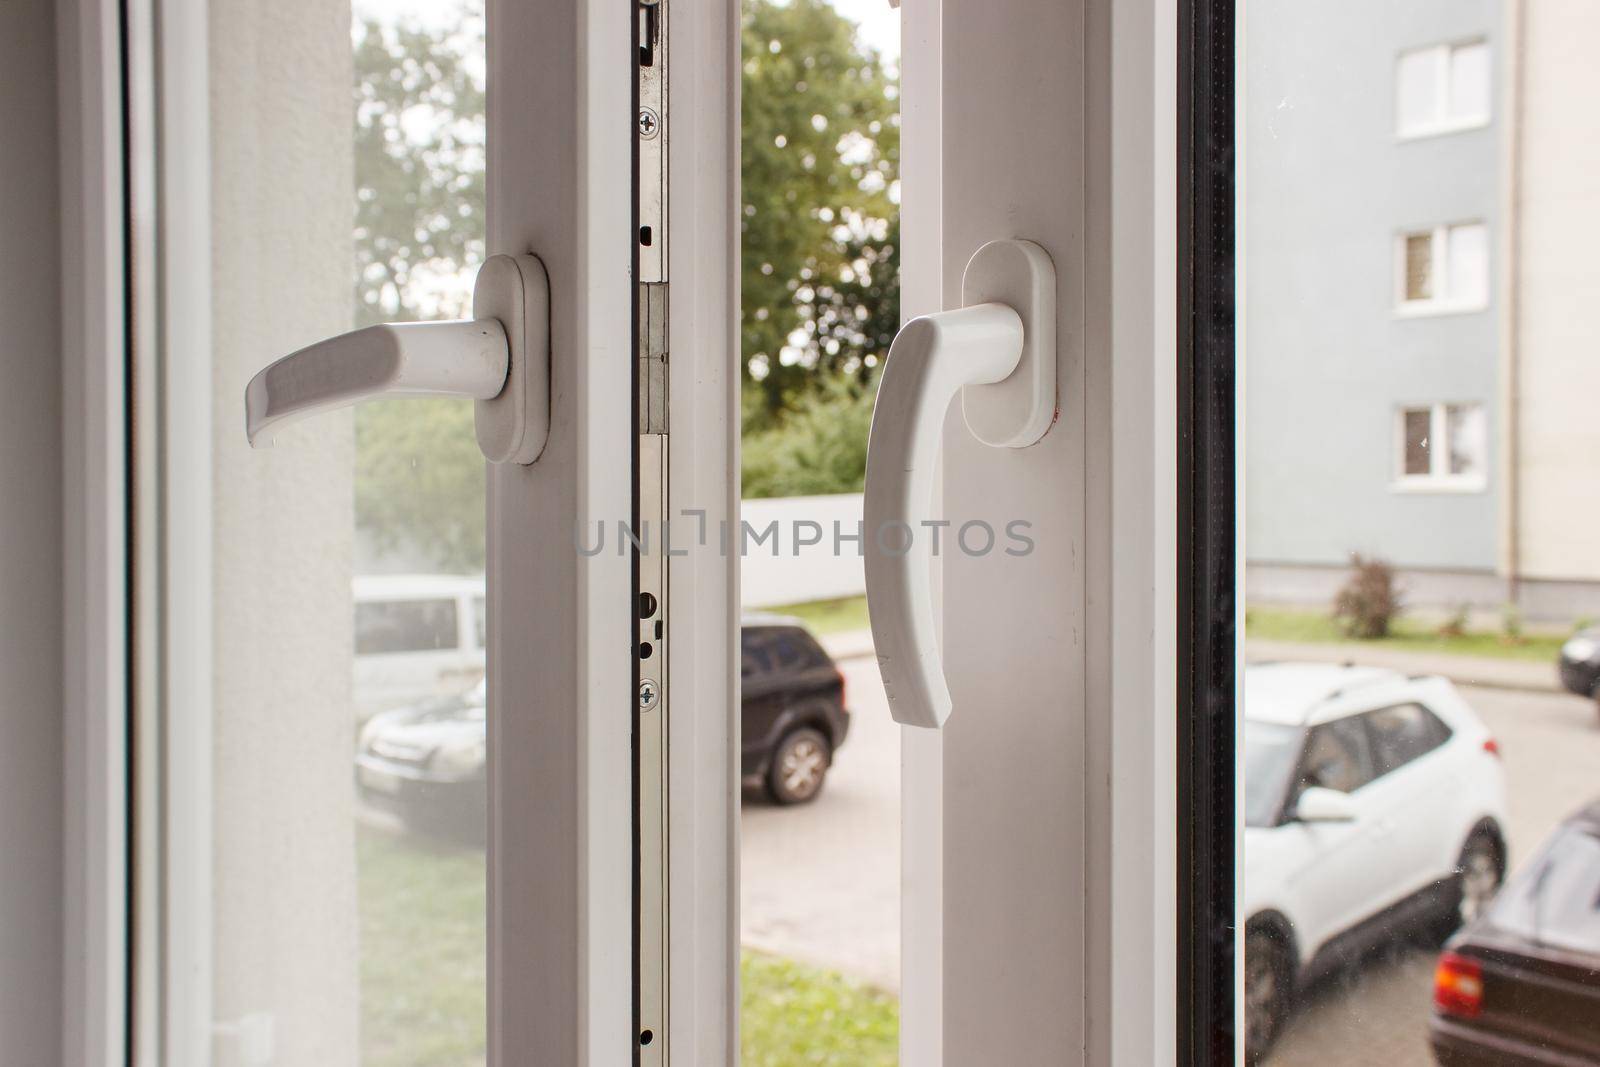 handles of opened white plastic window indoor closeup